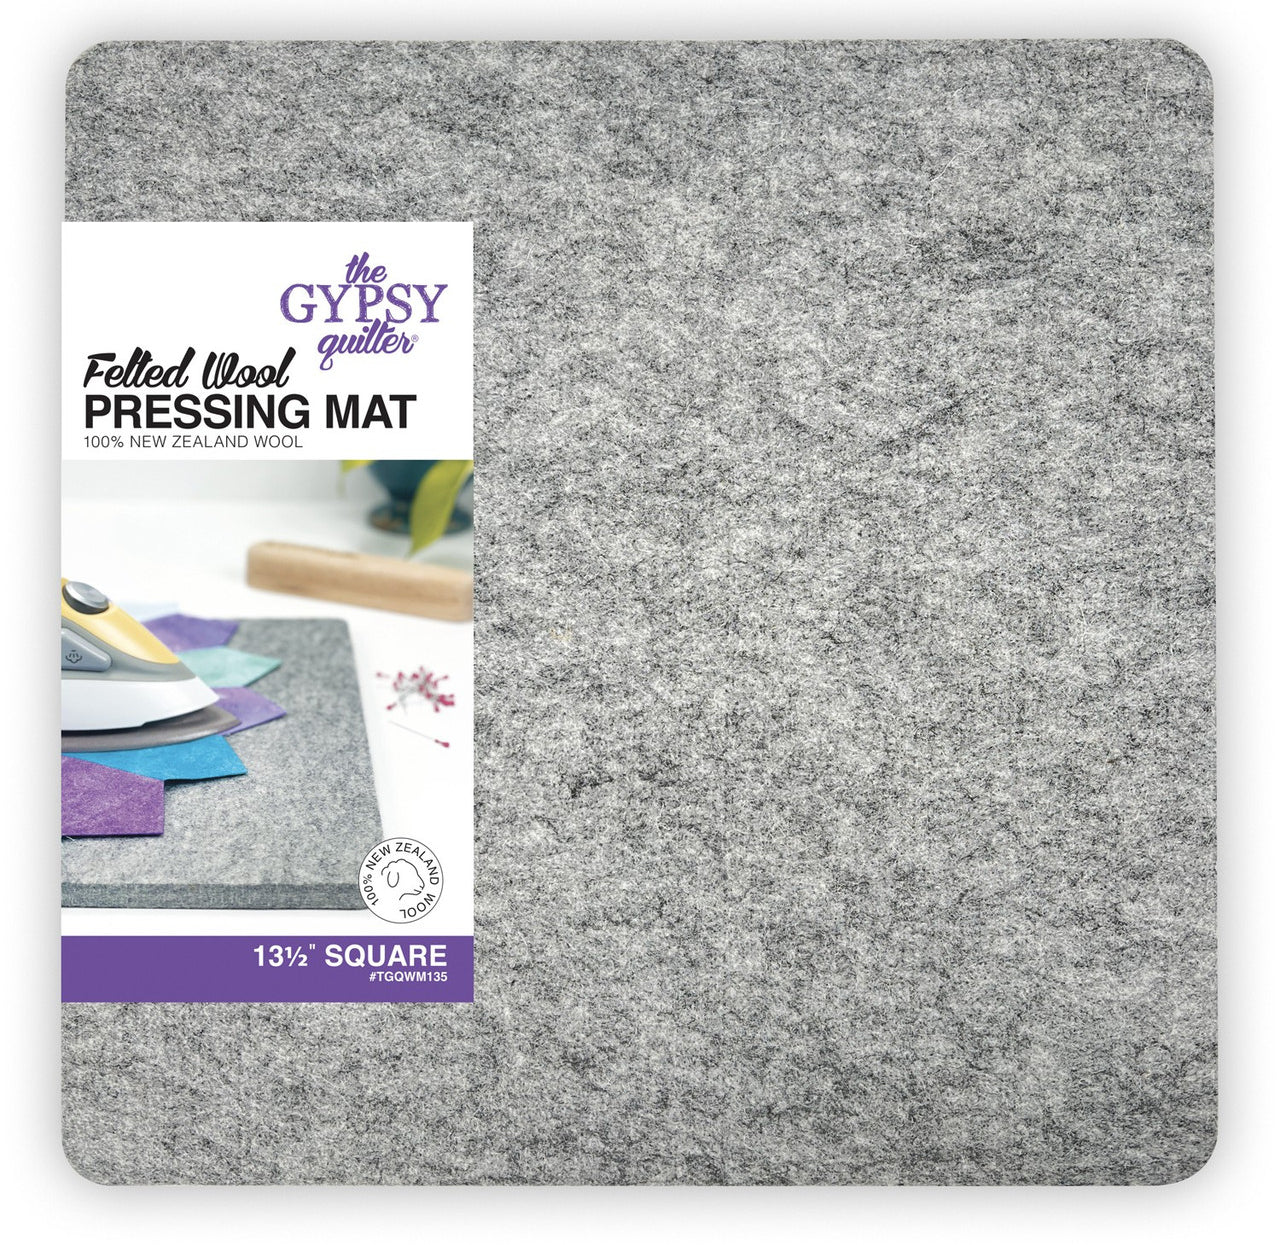 Wool Pressing Mat - 13-1/2" square